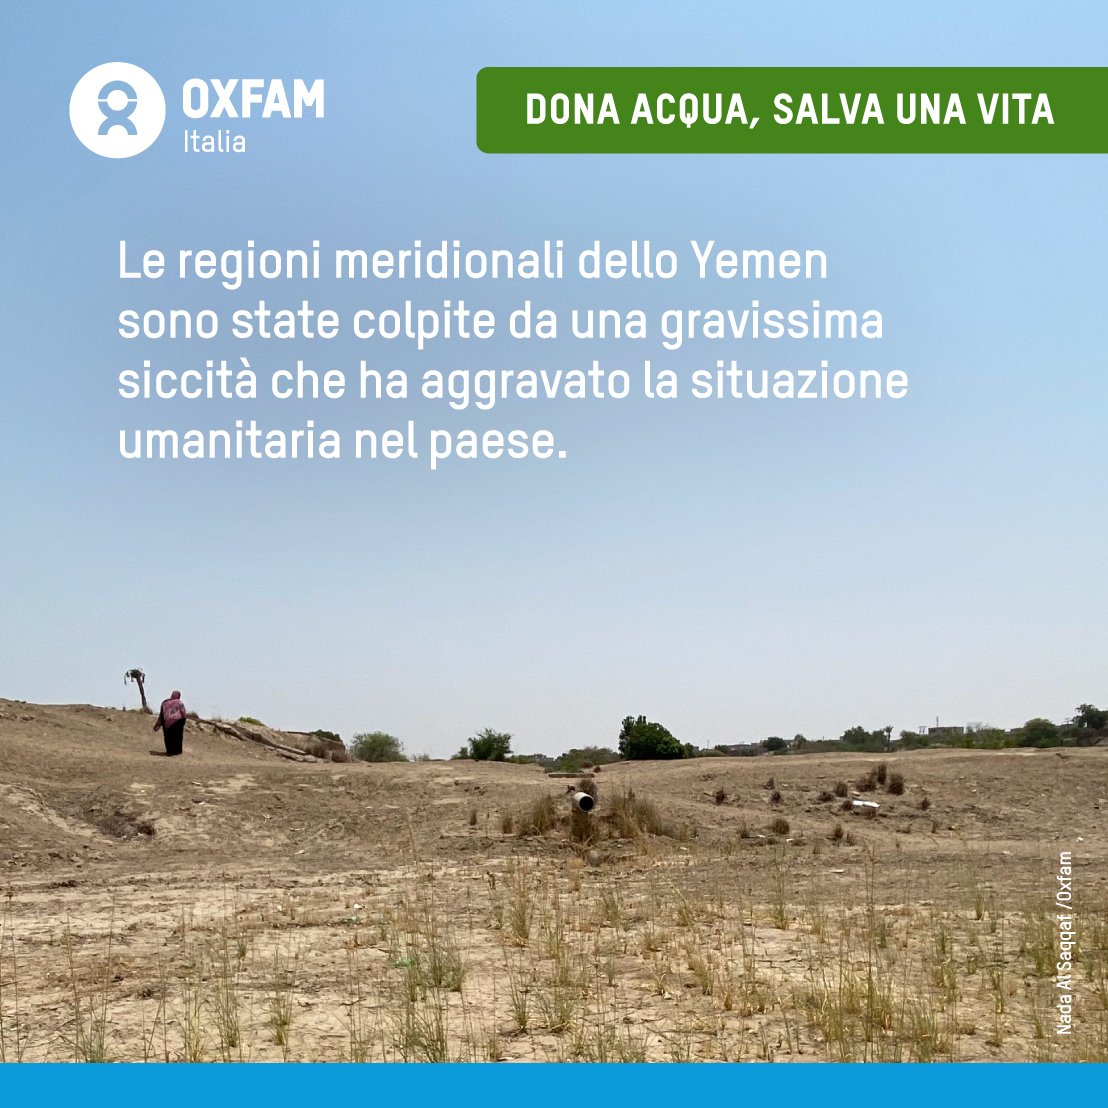 OxfamItalia tweet picture